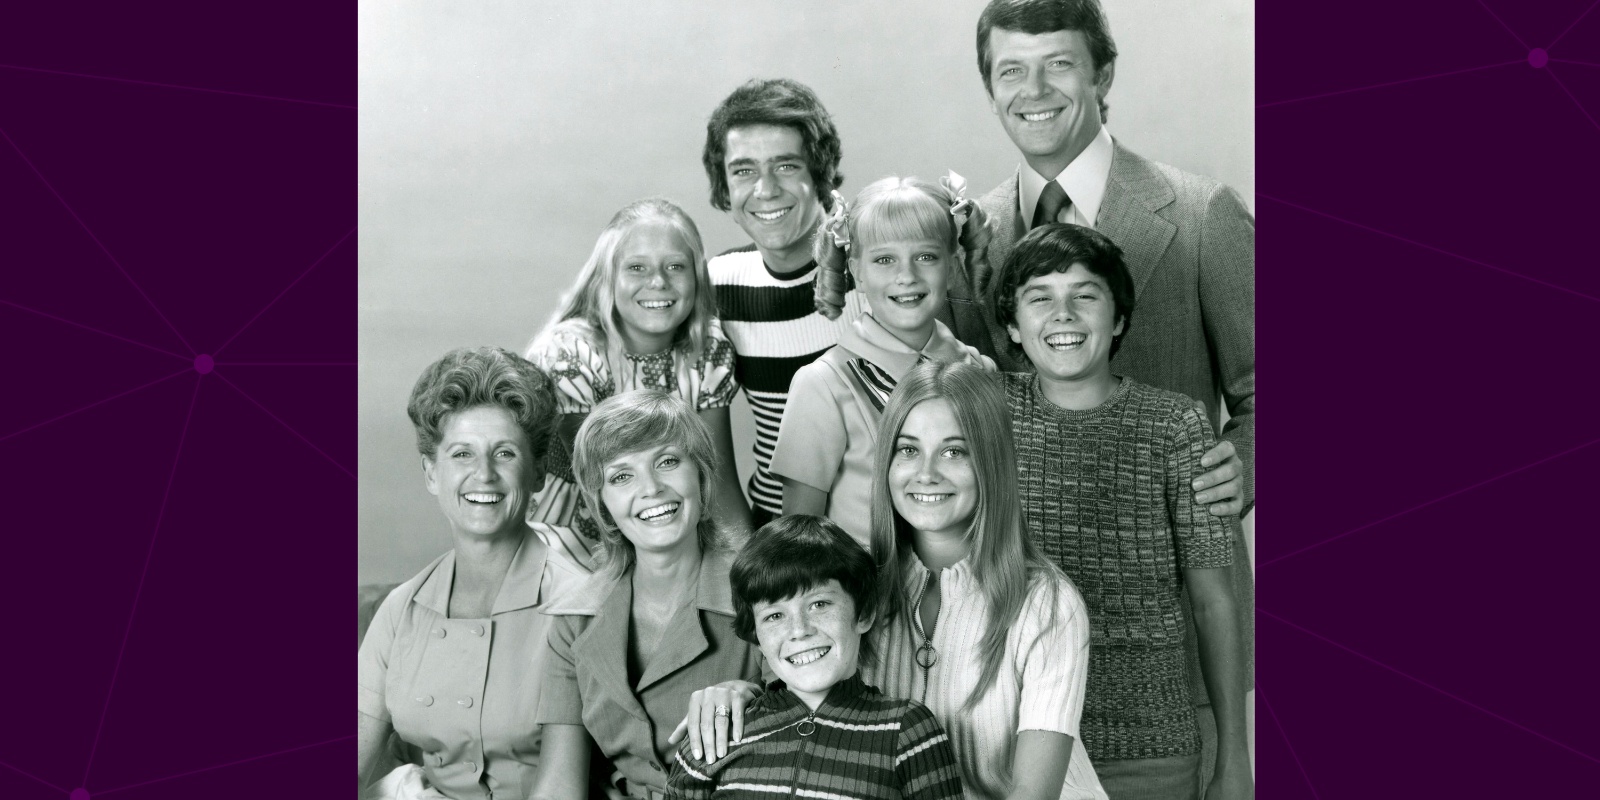 The 'Brady Bunch' cast in 1971 Barry Williams (Greg), Robert Reed (Mike); Eve Plumb (Jan), Susan Olsen (Cindy), Christopher Knight (Peter); Ann B. Davis, Florence Henderson Mike Lookinland, Maureen McCormick (Marcia.)